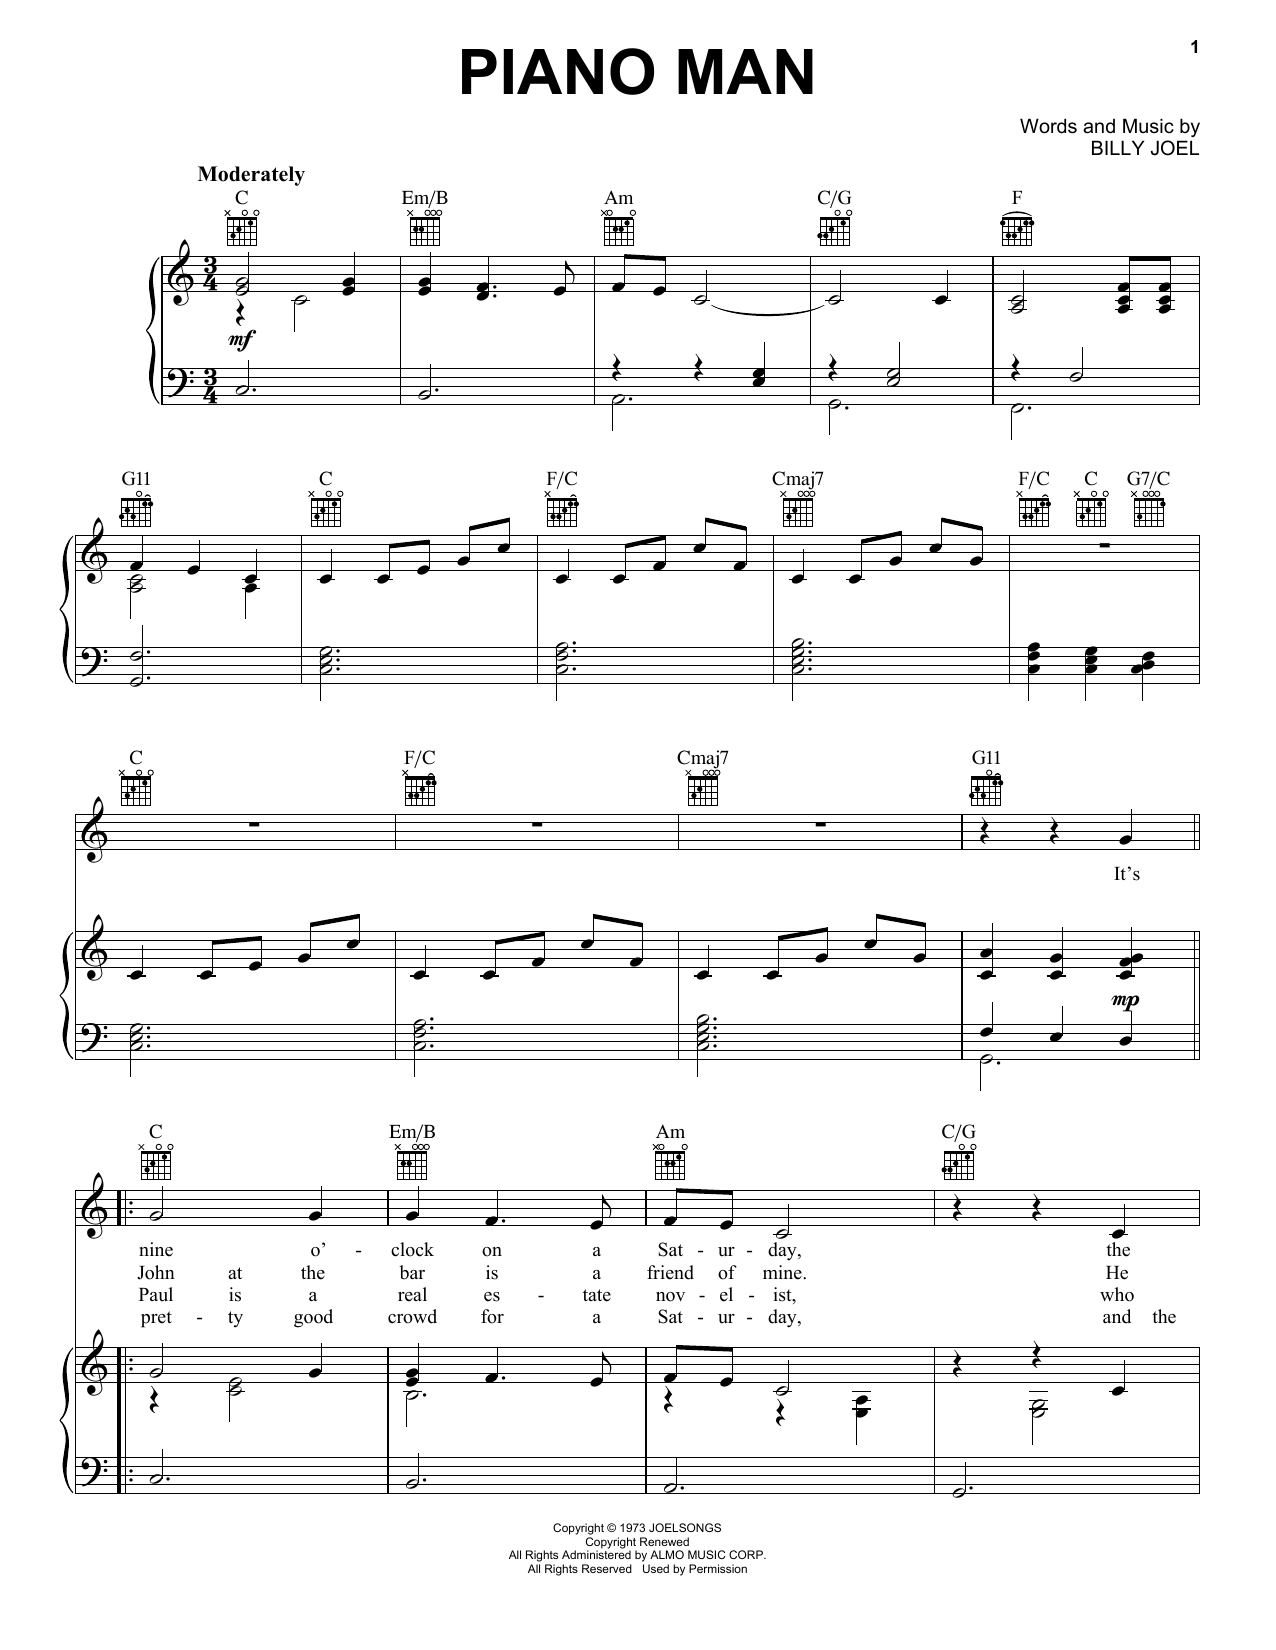 Billy Joel Piano Man Sheet Music Notes & Chords for Piano - Download or Print PDF